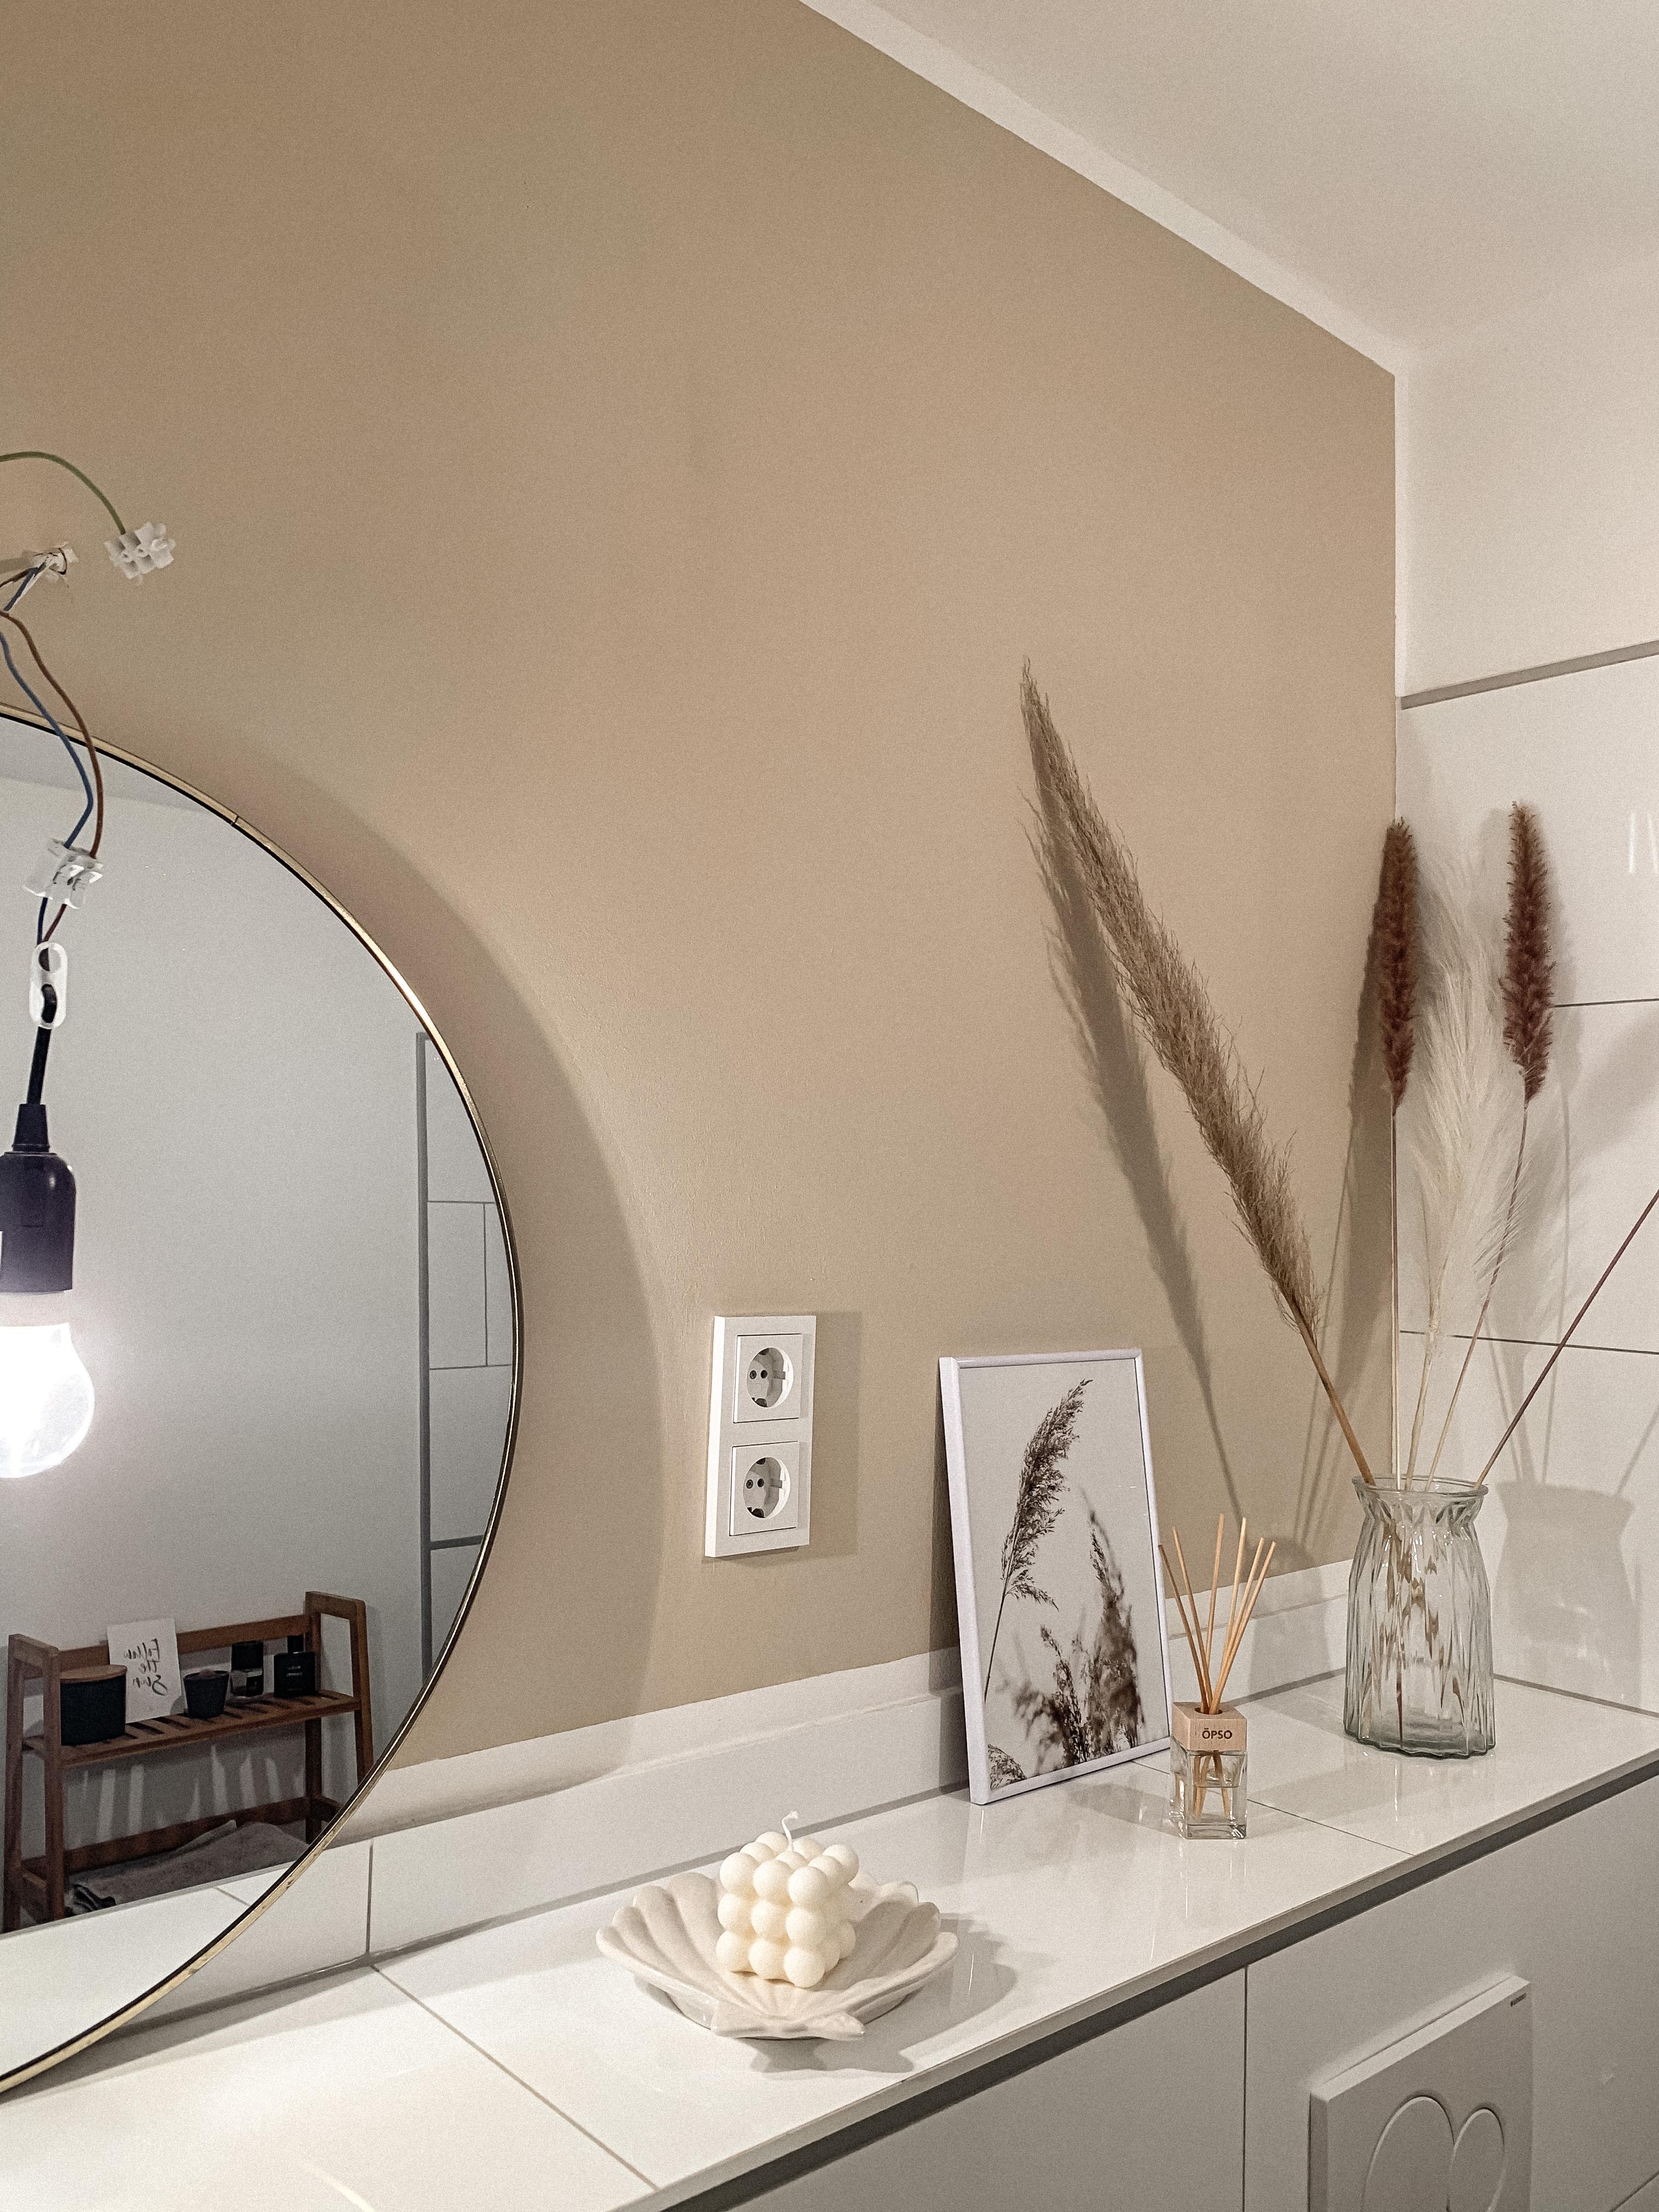 #bathroom #bath #home #nordic #minimalism #couchmagazin